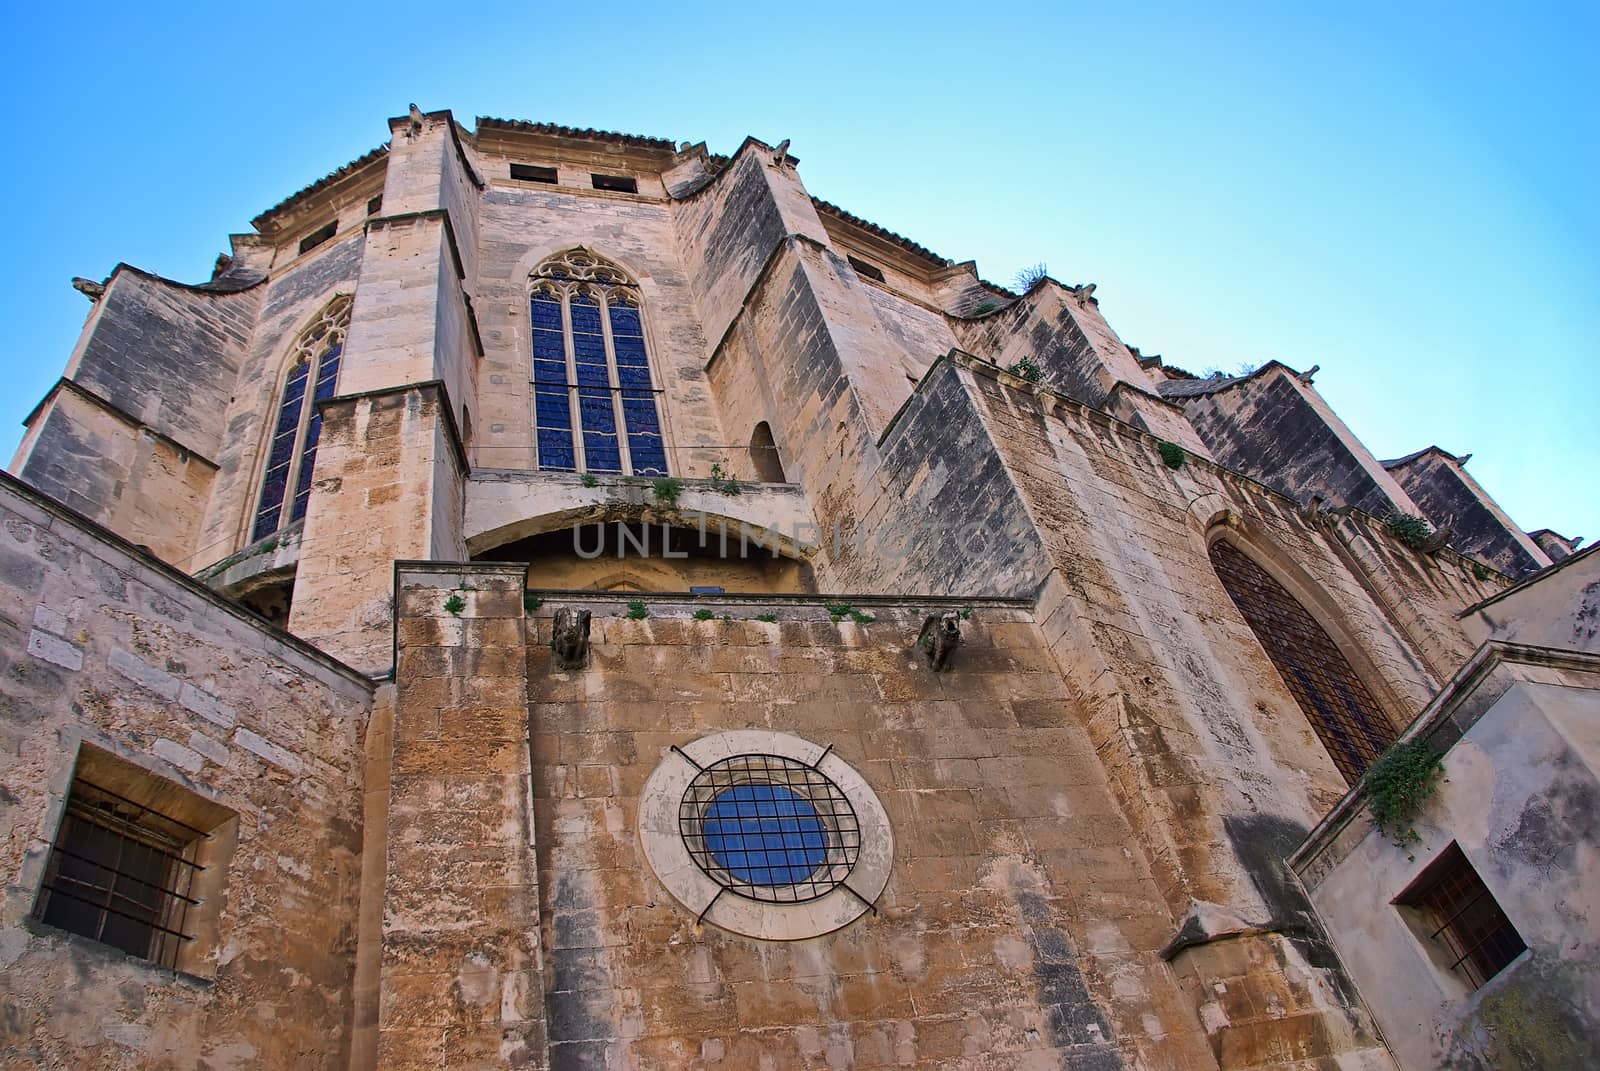 Old gothic church in Majorca (Spain)